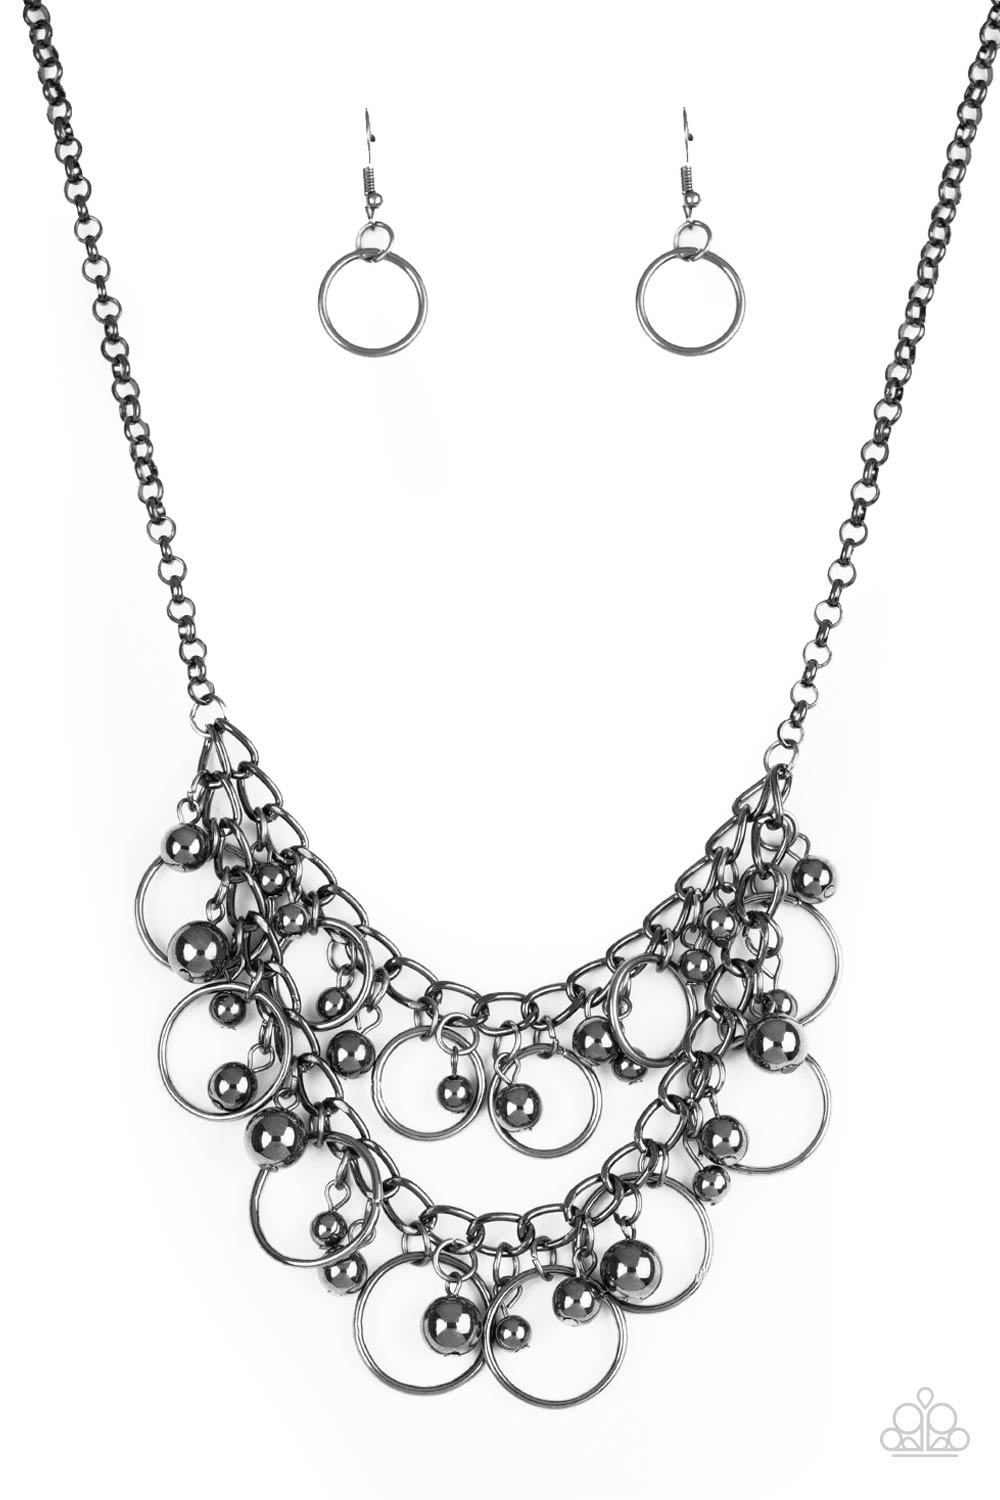 Warning Bells Gunmetal Black Necklace - Paparazzi Accessories - lightbox -CarasShop.com - $5 Jewelry by Cara Jewels